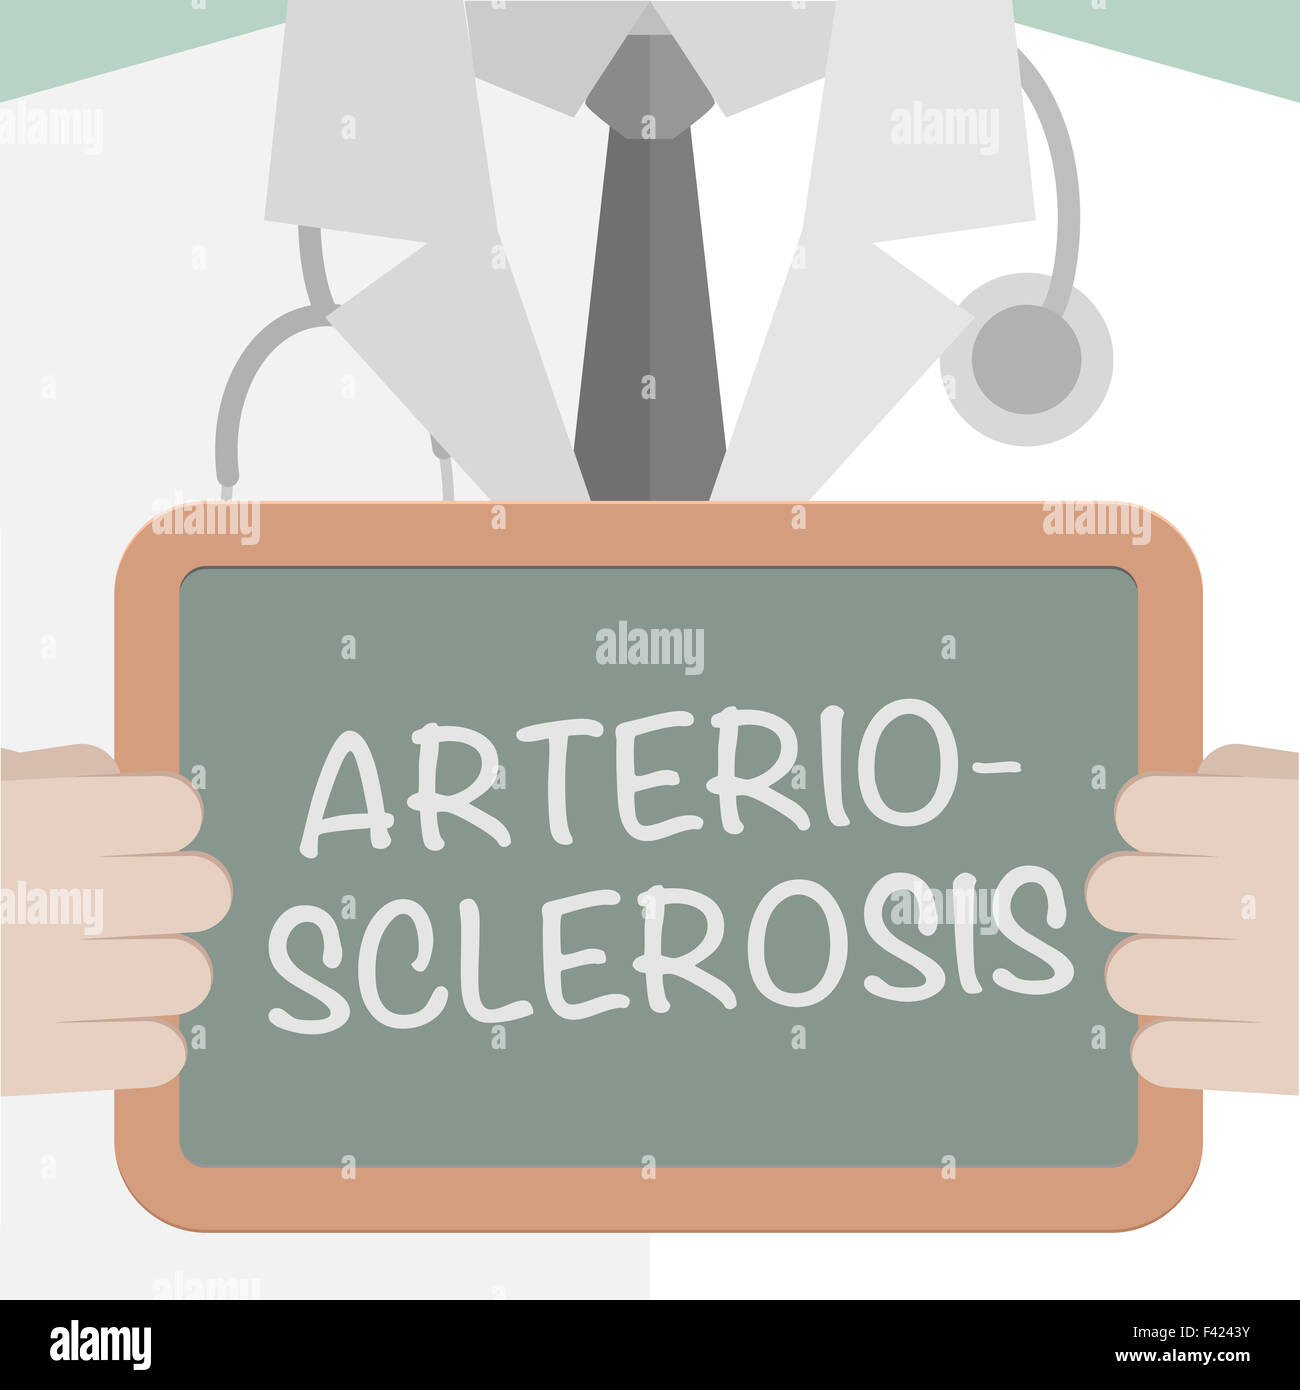 Medical Board Arteriosclerosis Stock Photo